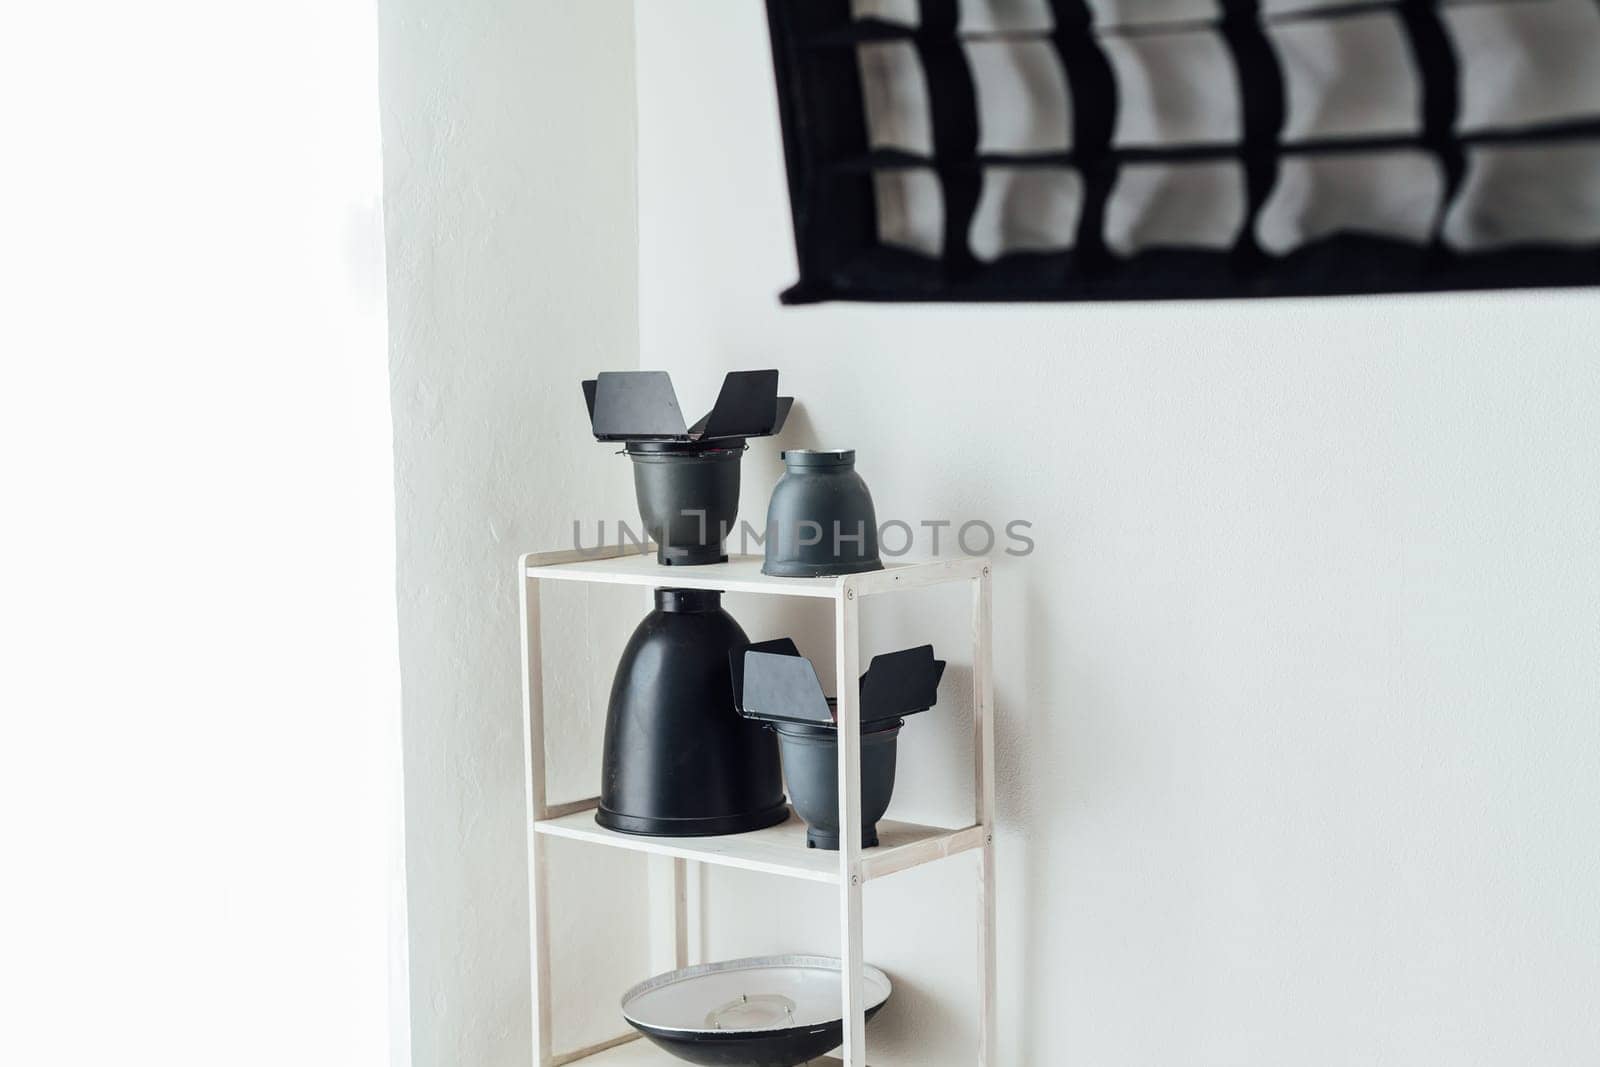 Flash photo studio accessories photographer equipment interior by Simakov